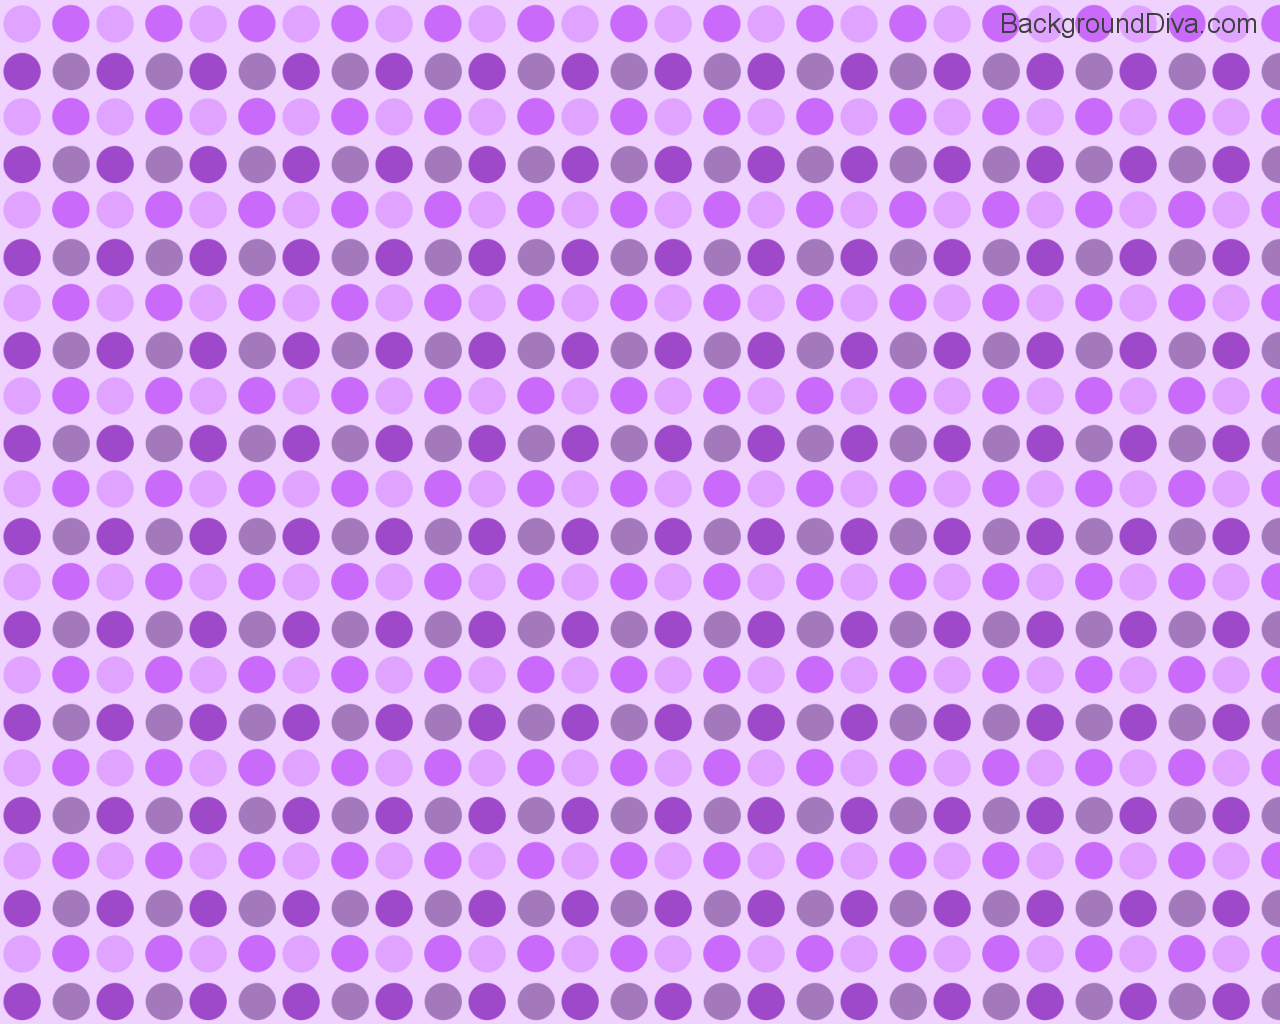 Wallpaper Polka Dot Purple